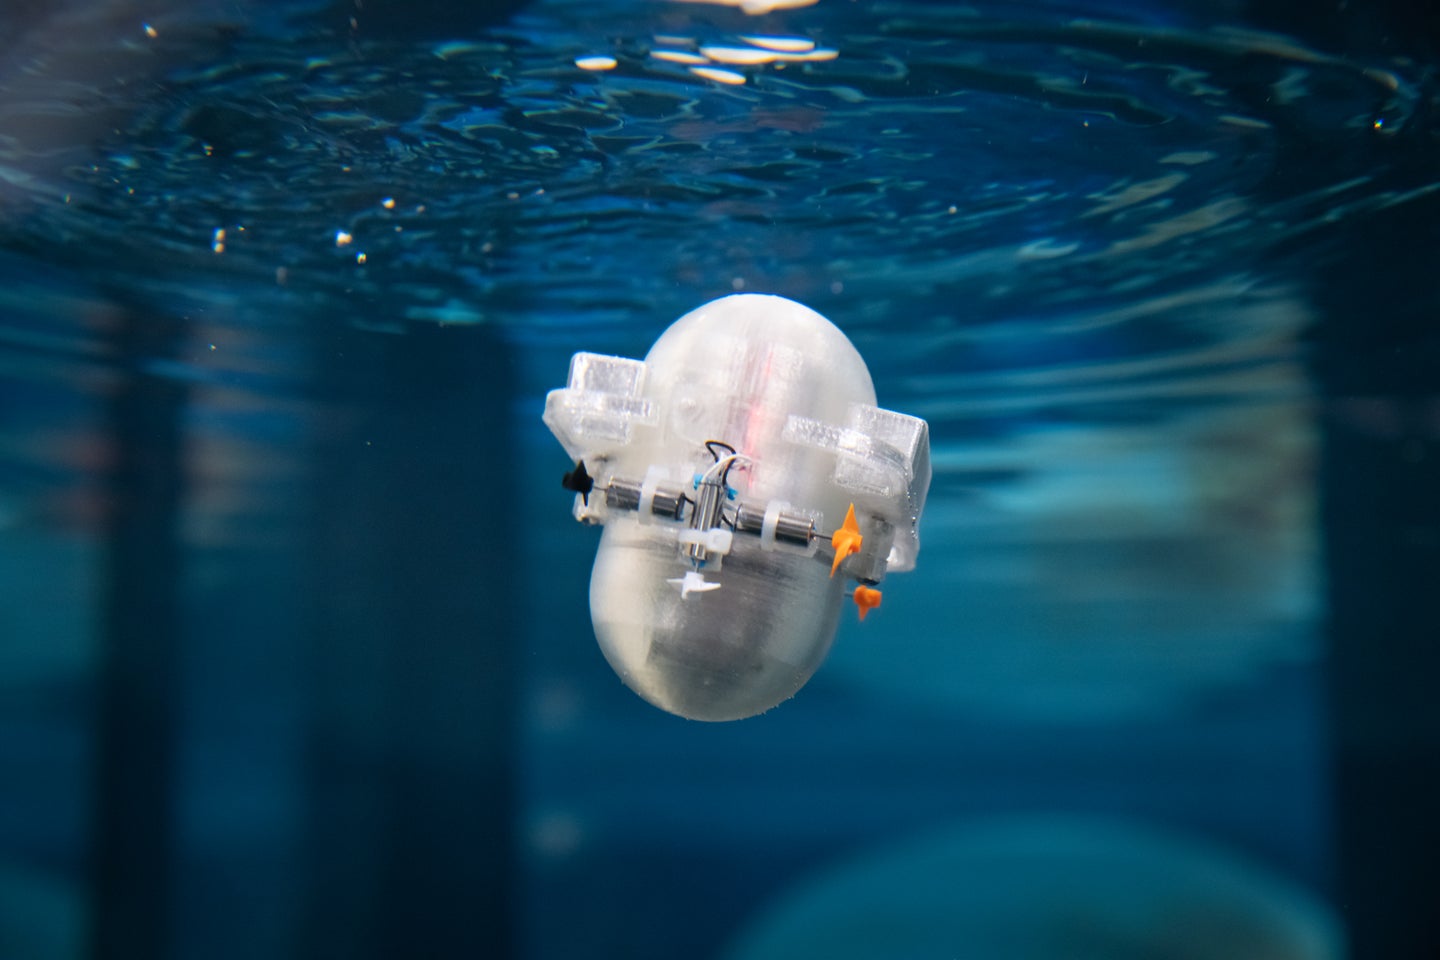 Caltech CARL octopus-like AI robot in water